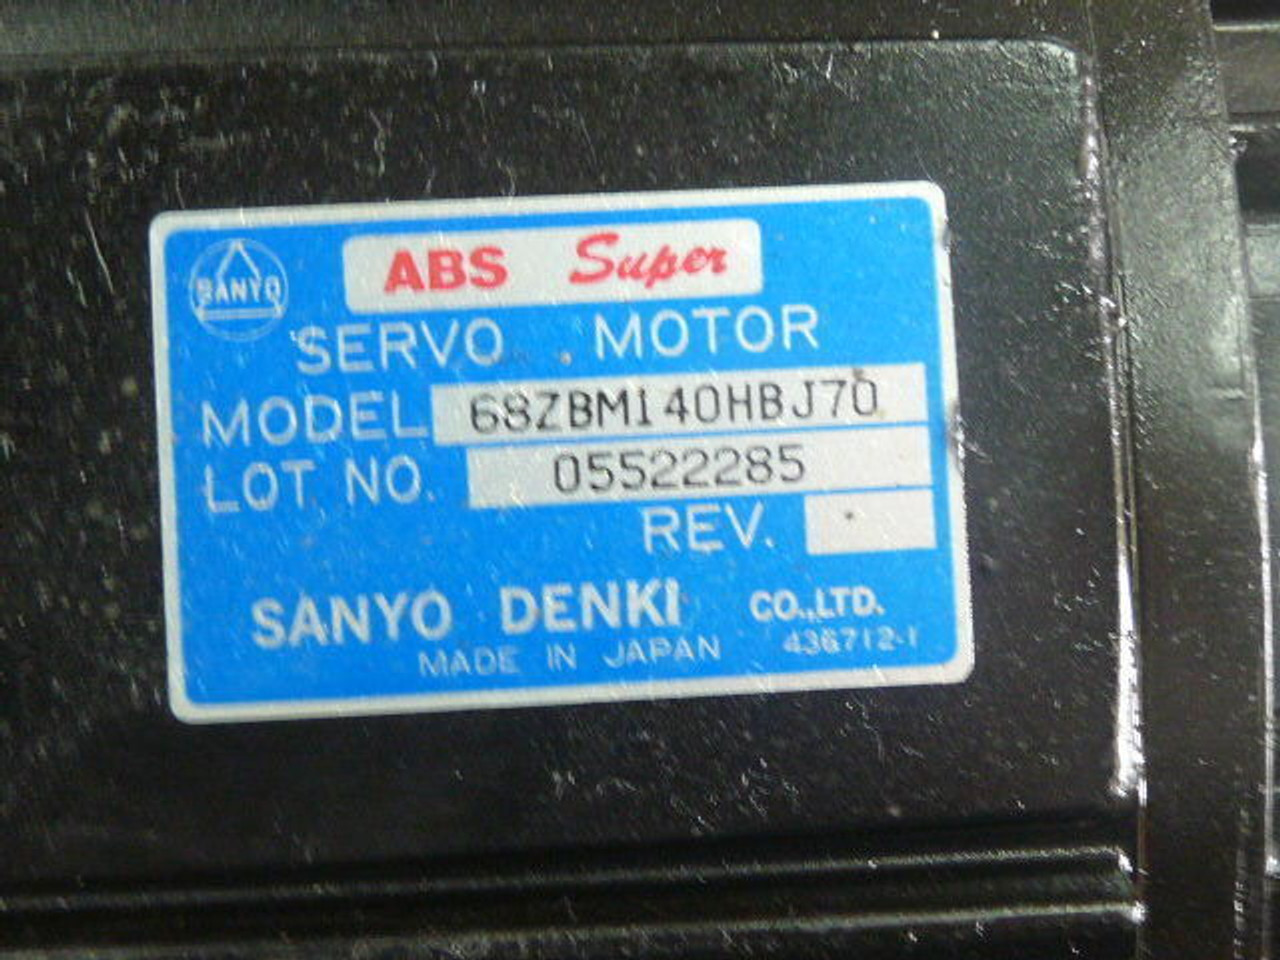 Sanyo Denki 68ZBM140HBJ70 ABS Super Servo Motor USED